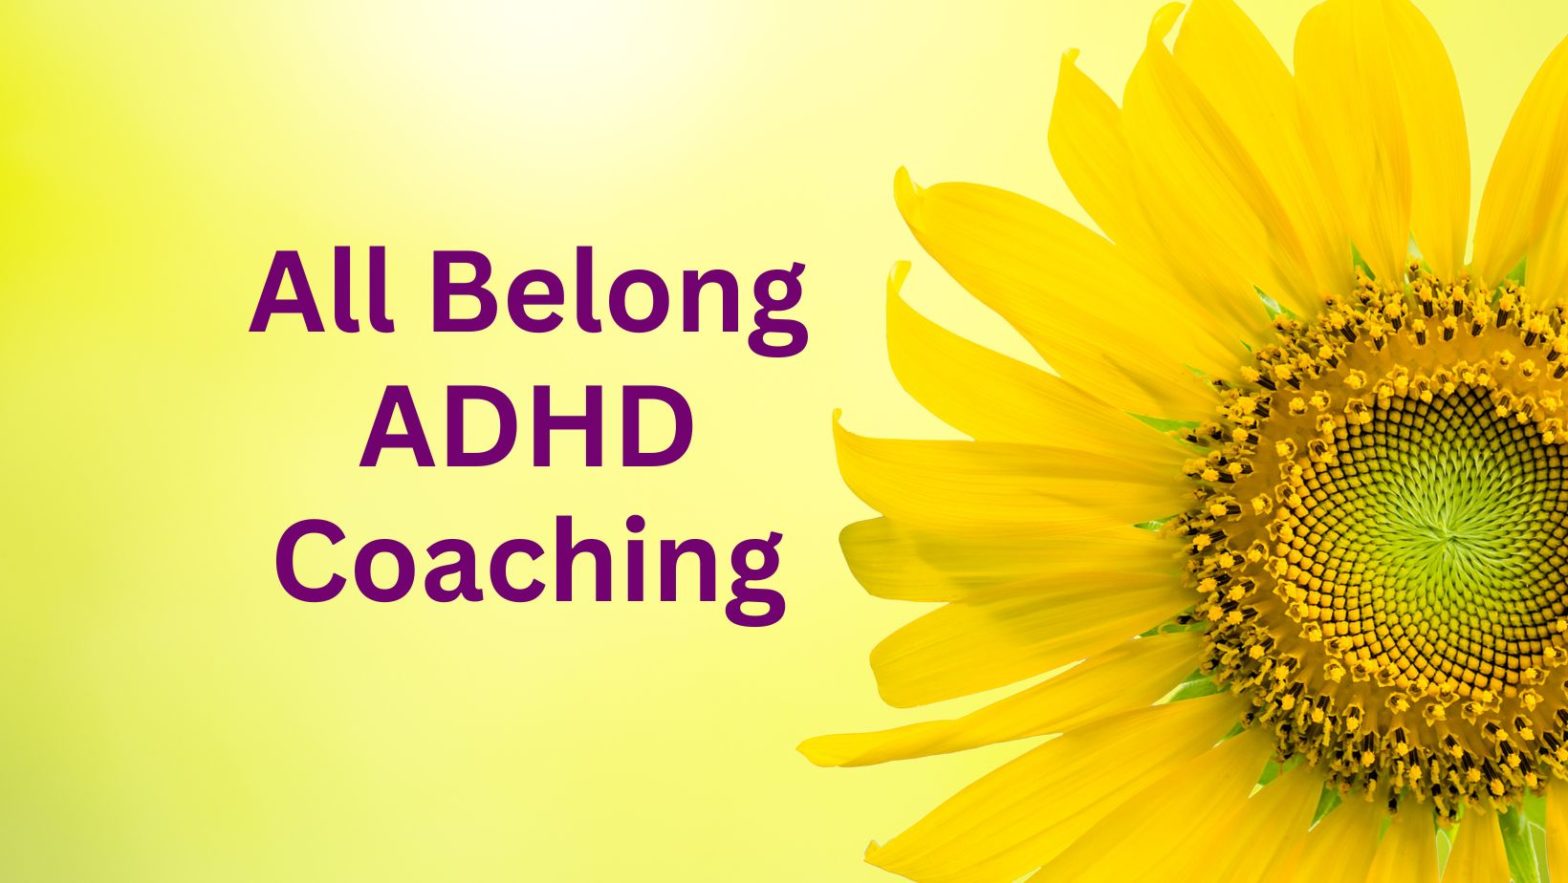 About All Belong ADHD Coaching